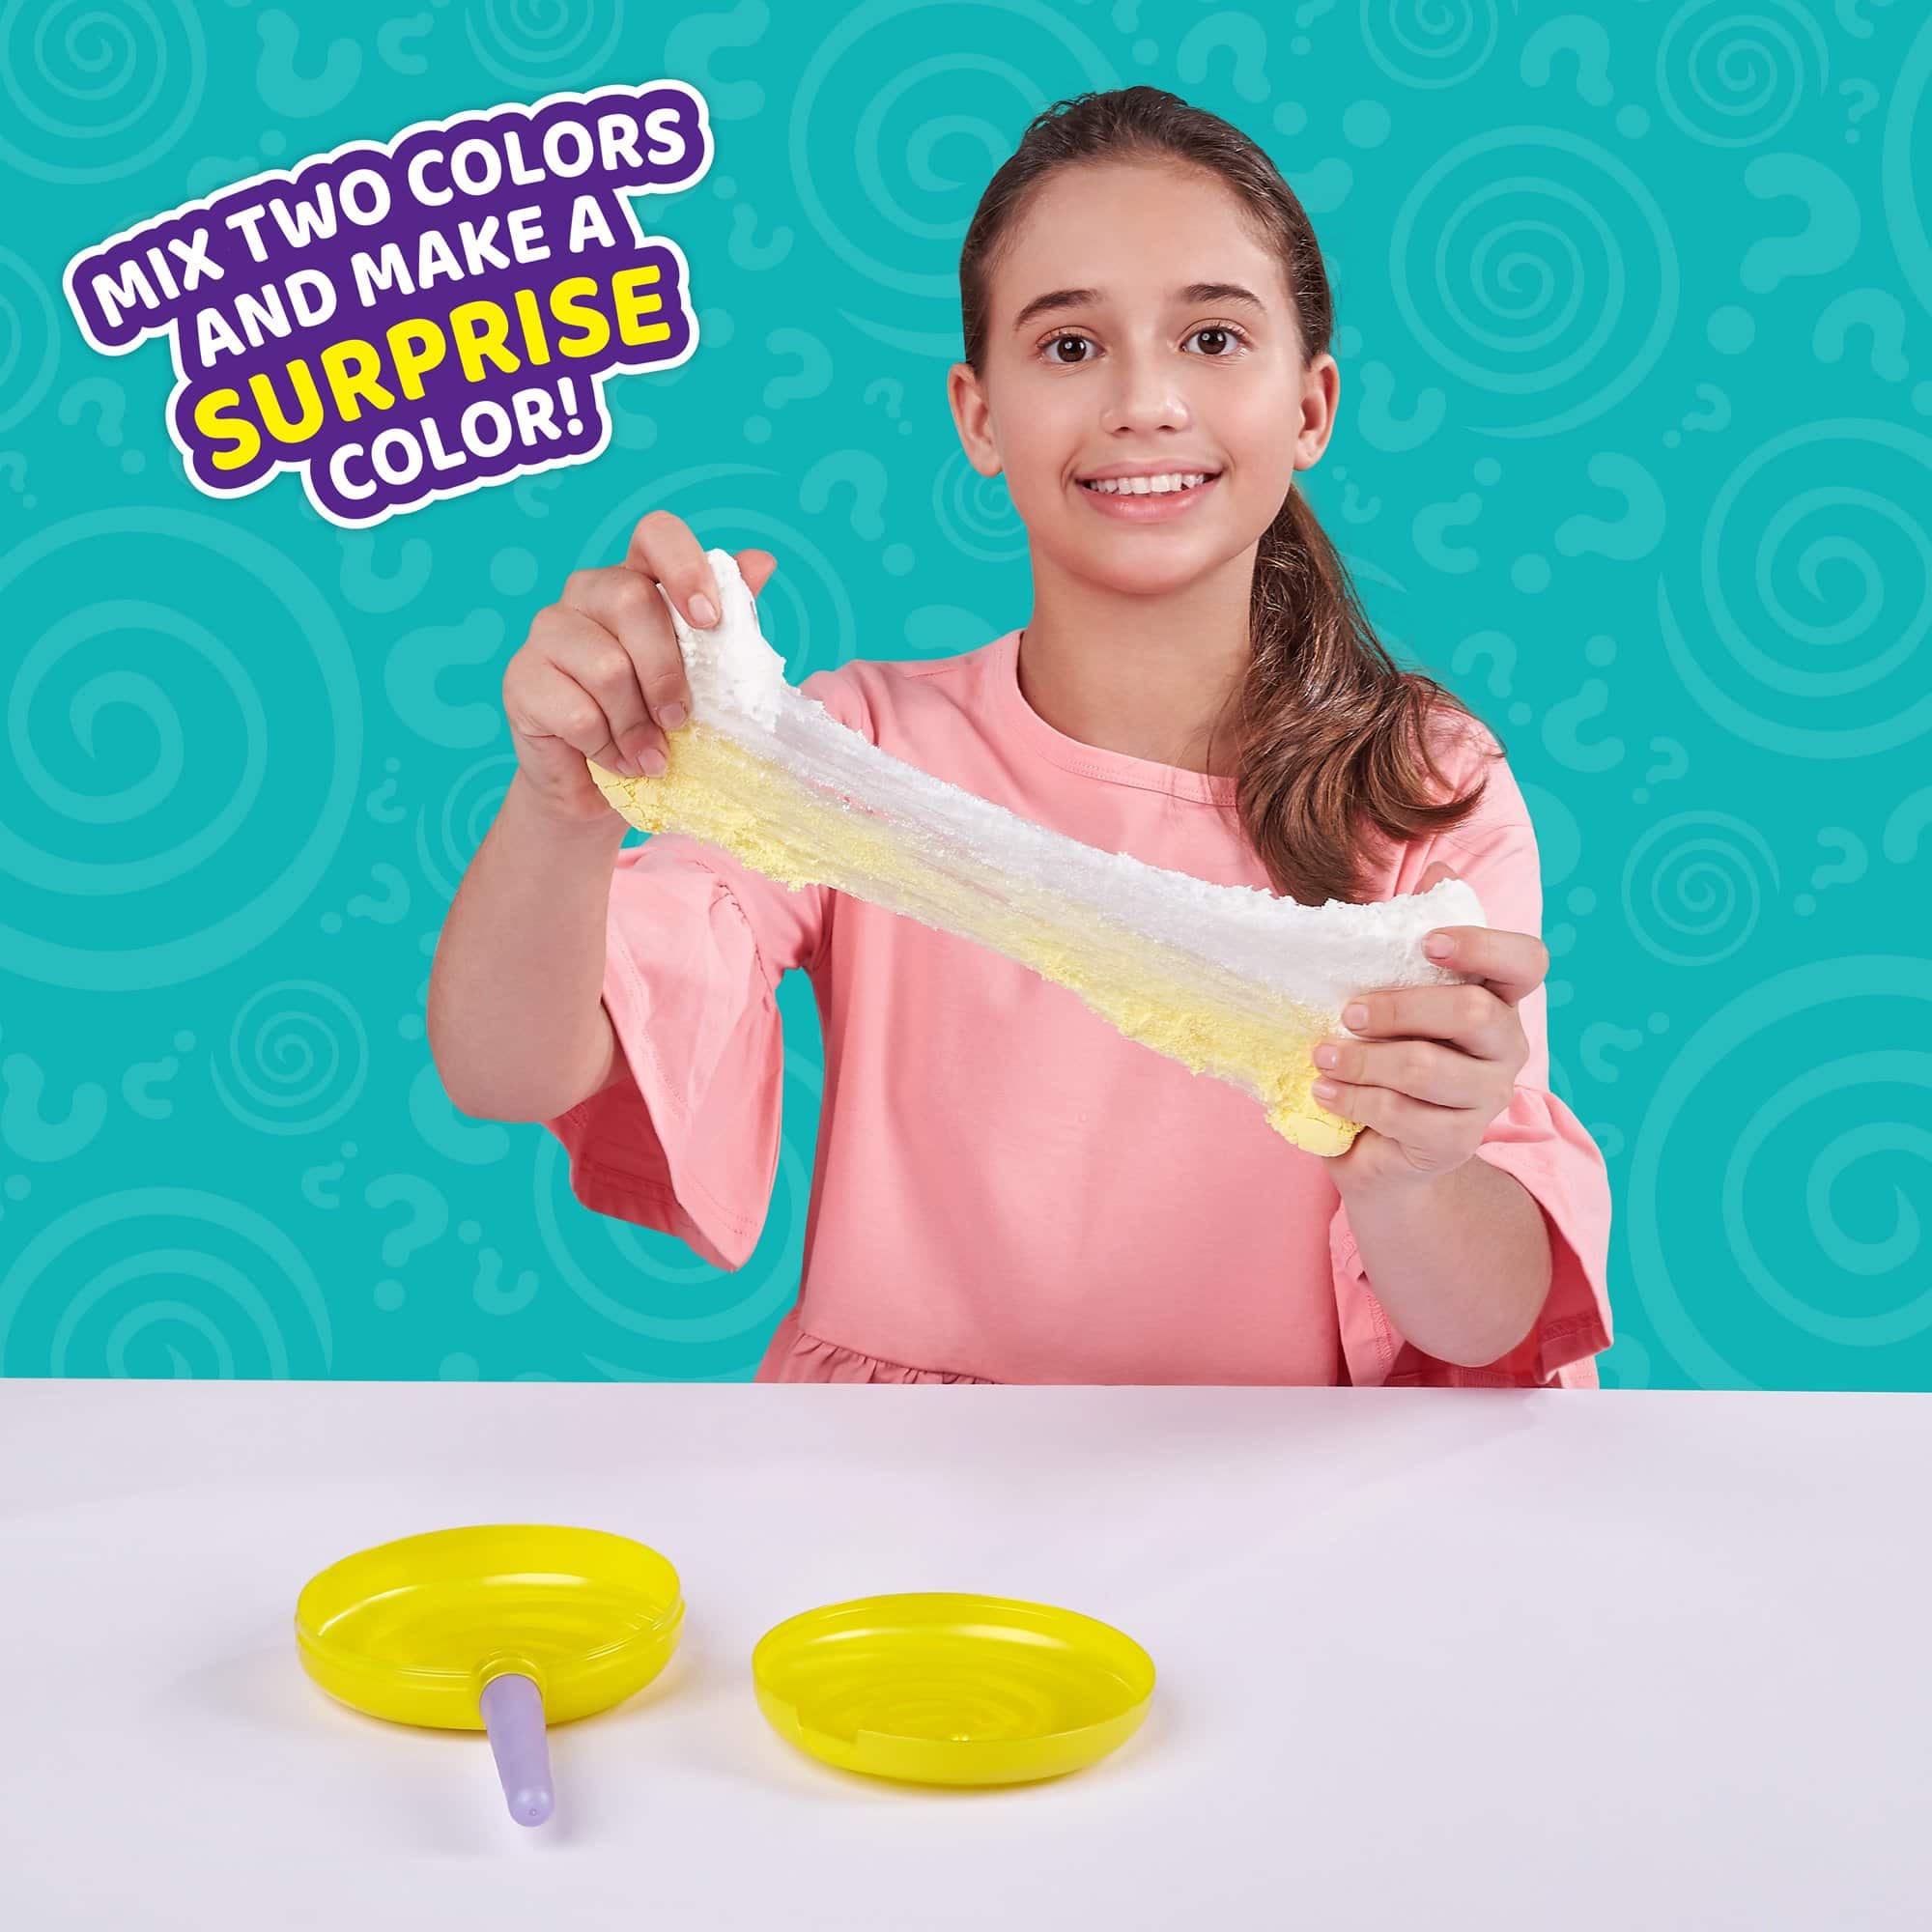 Cra-Z-Art Nickelodeon Slime Kit, Stress Less